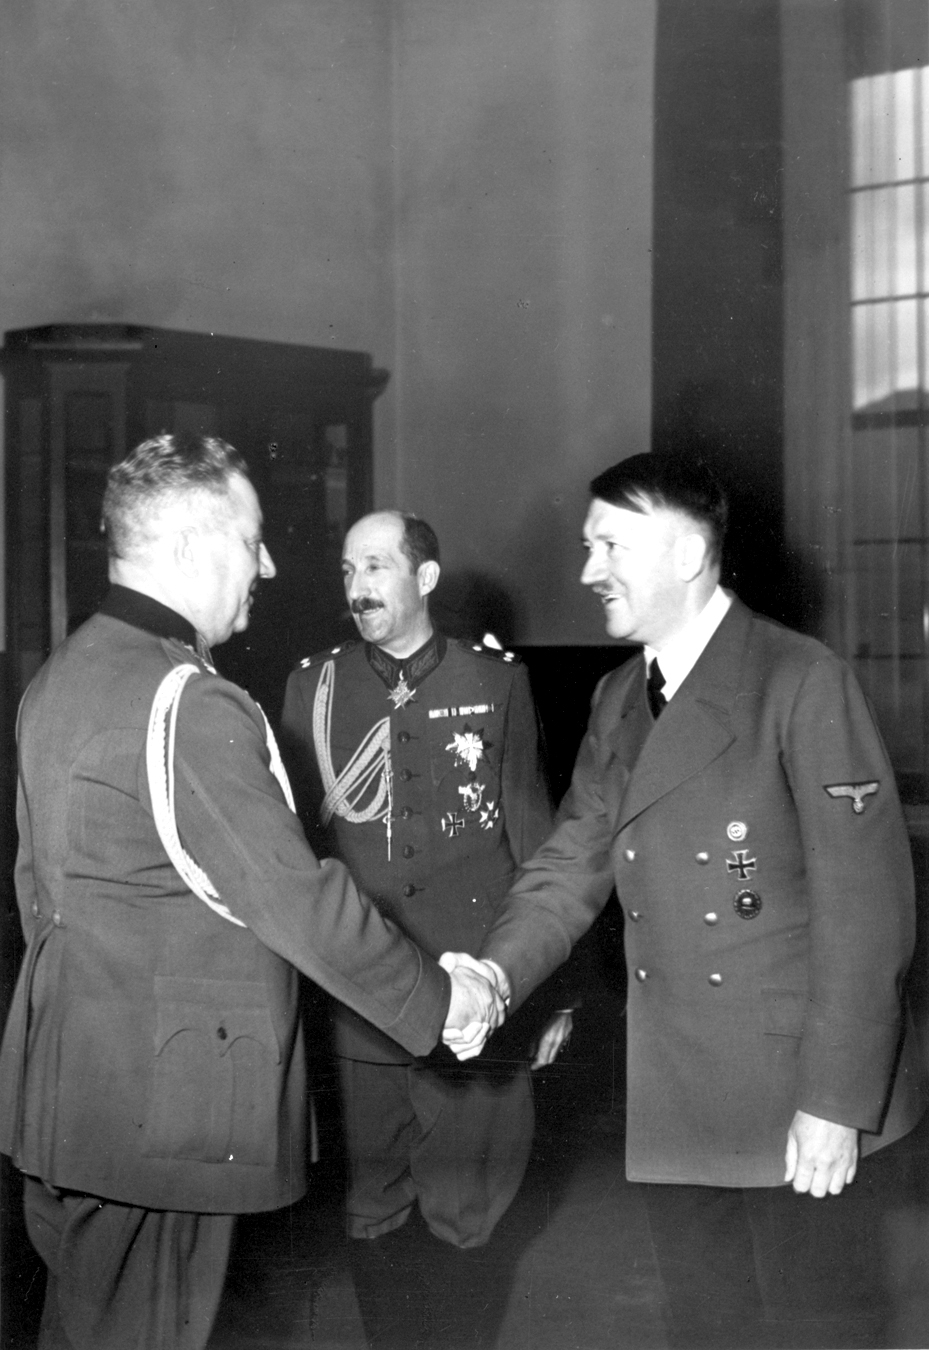 Adolf Hitler with Zar Boris III in the Berghof, from Eva Braun's albums